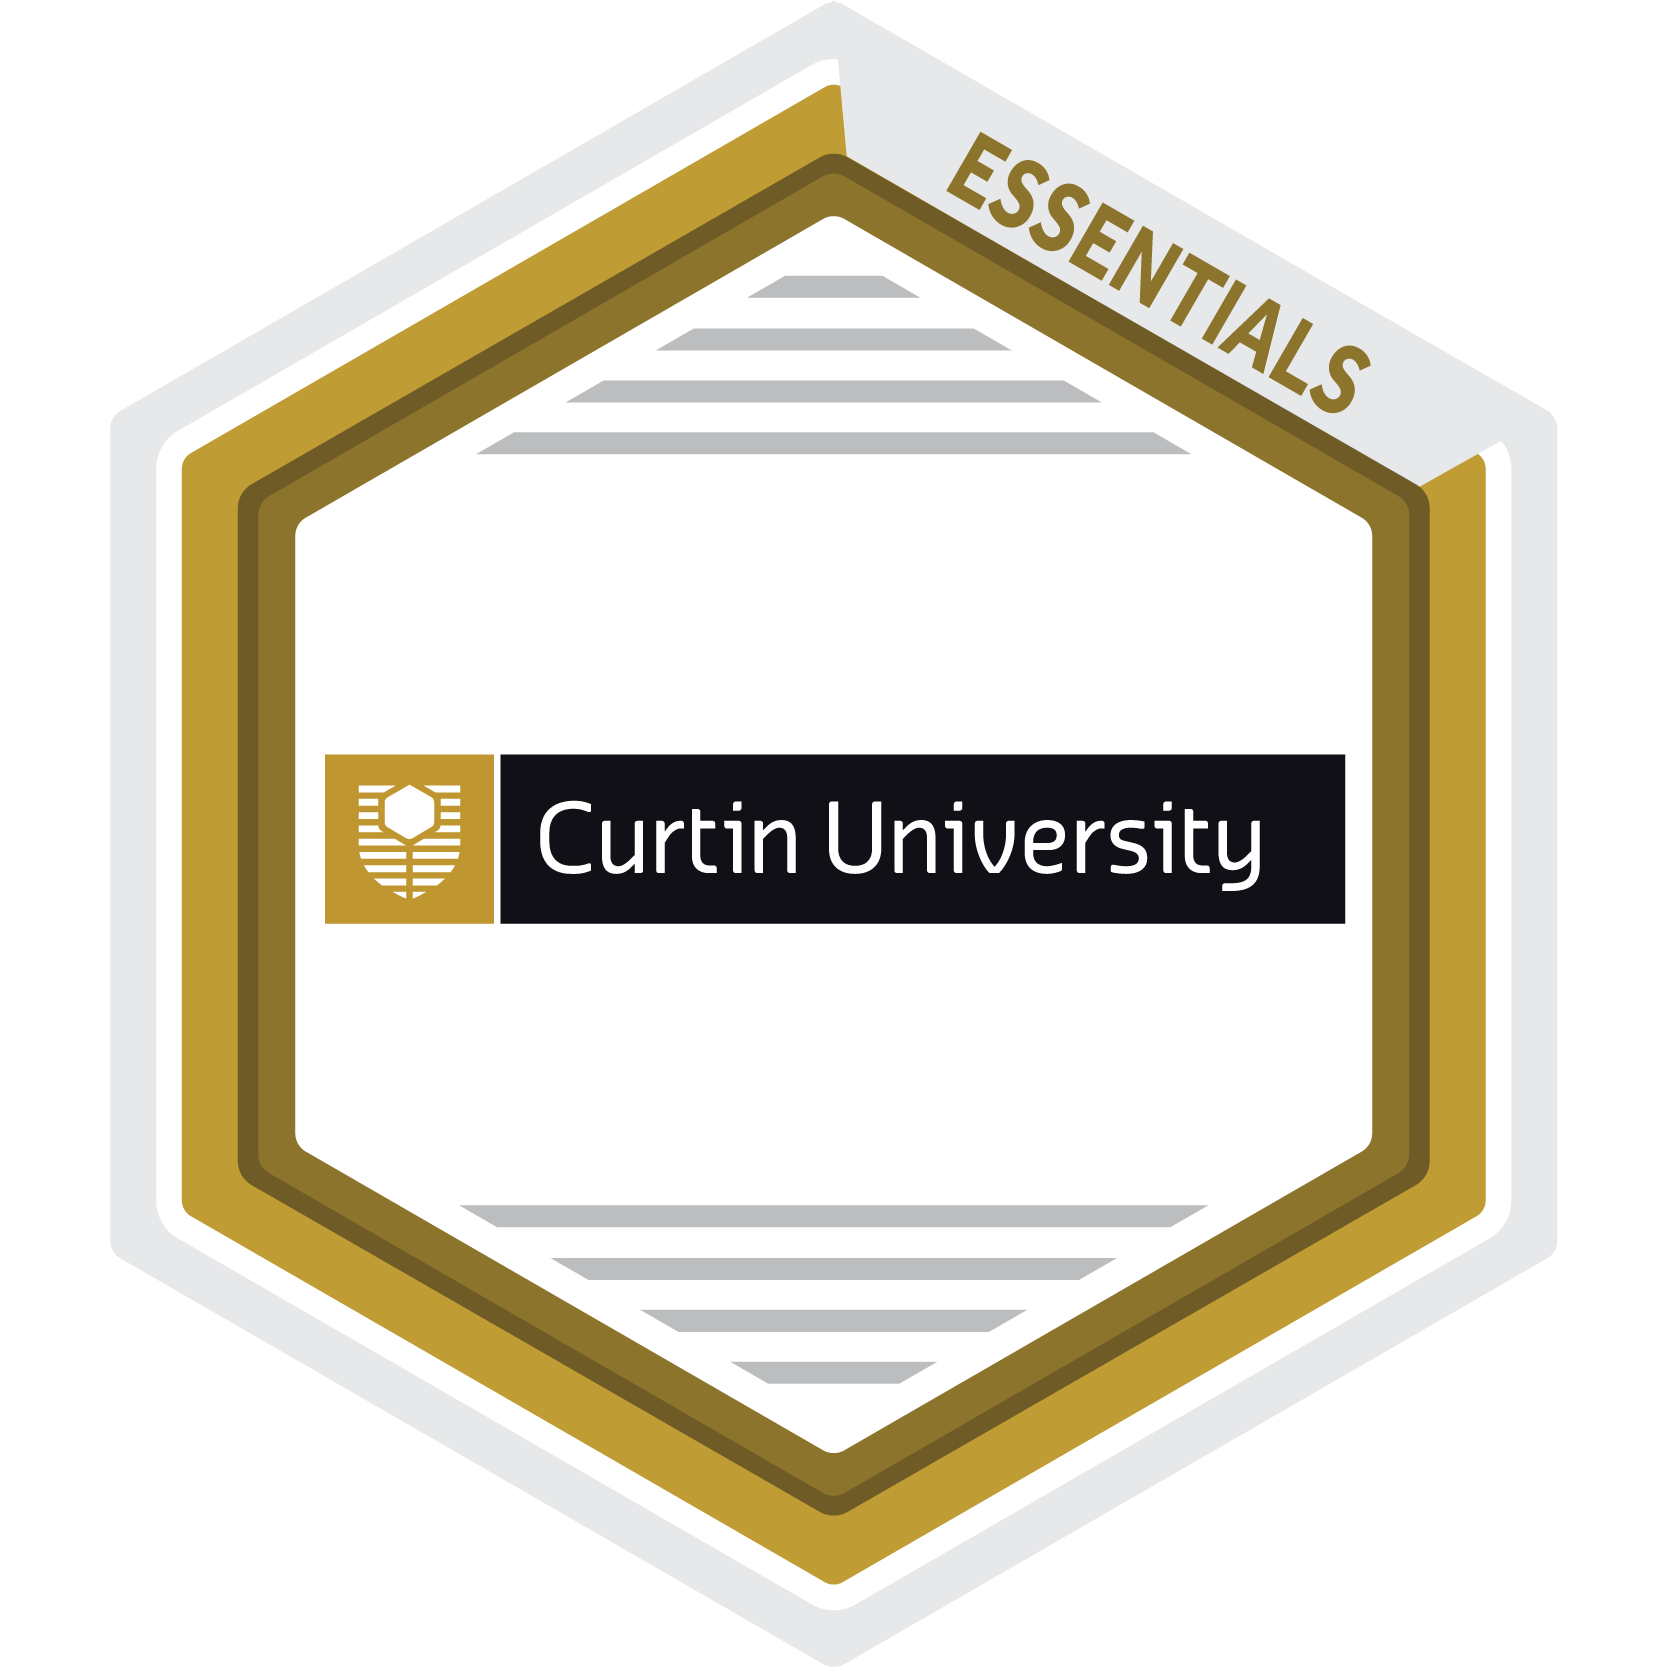 Curtin Essentials Badge - Hexagon with curtin logo